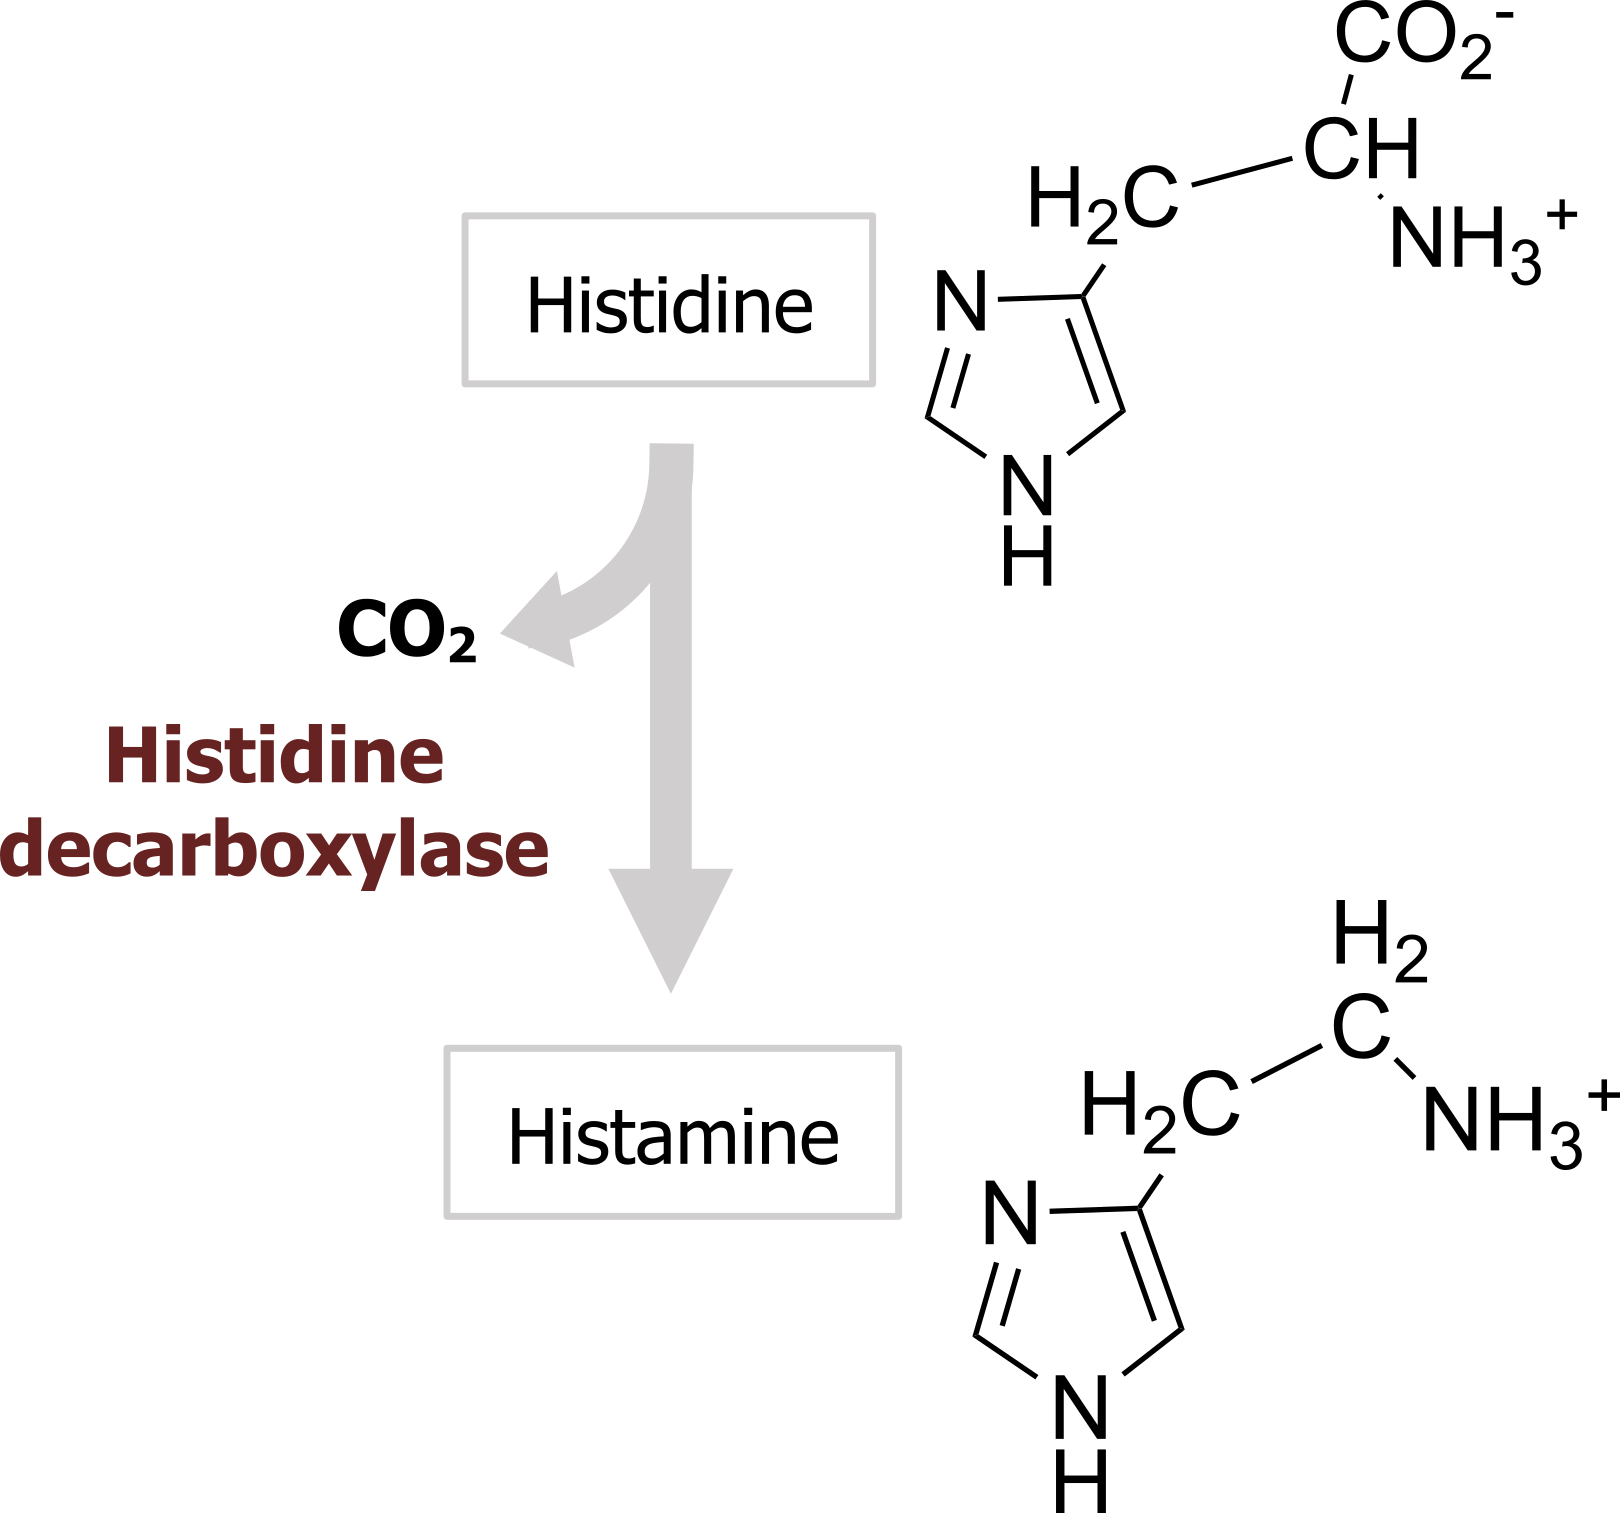 Histidine arrow with enzyme histidine carboxylase and loss of CO2 to histamine. Histidine IUPAC ID: (2S)-2-amino-3-(1H-imidazol-5-yl)propanoic acid. Histamine IUPAC ID: 2-(1H-imidazol-5-yl)ethanamine